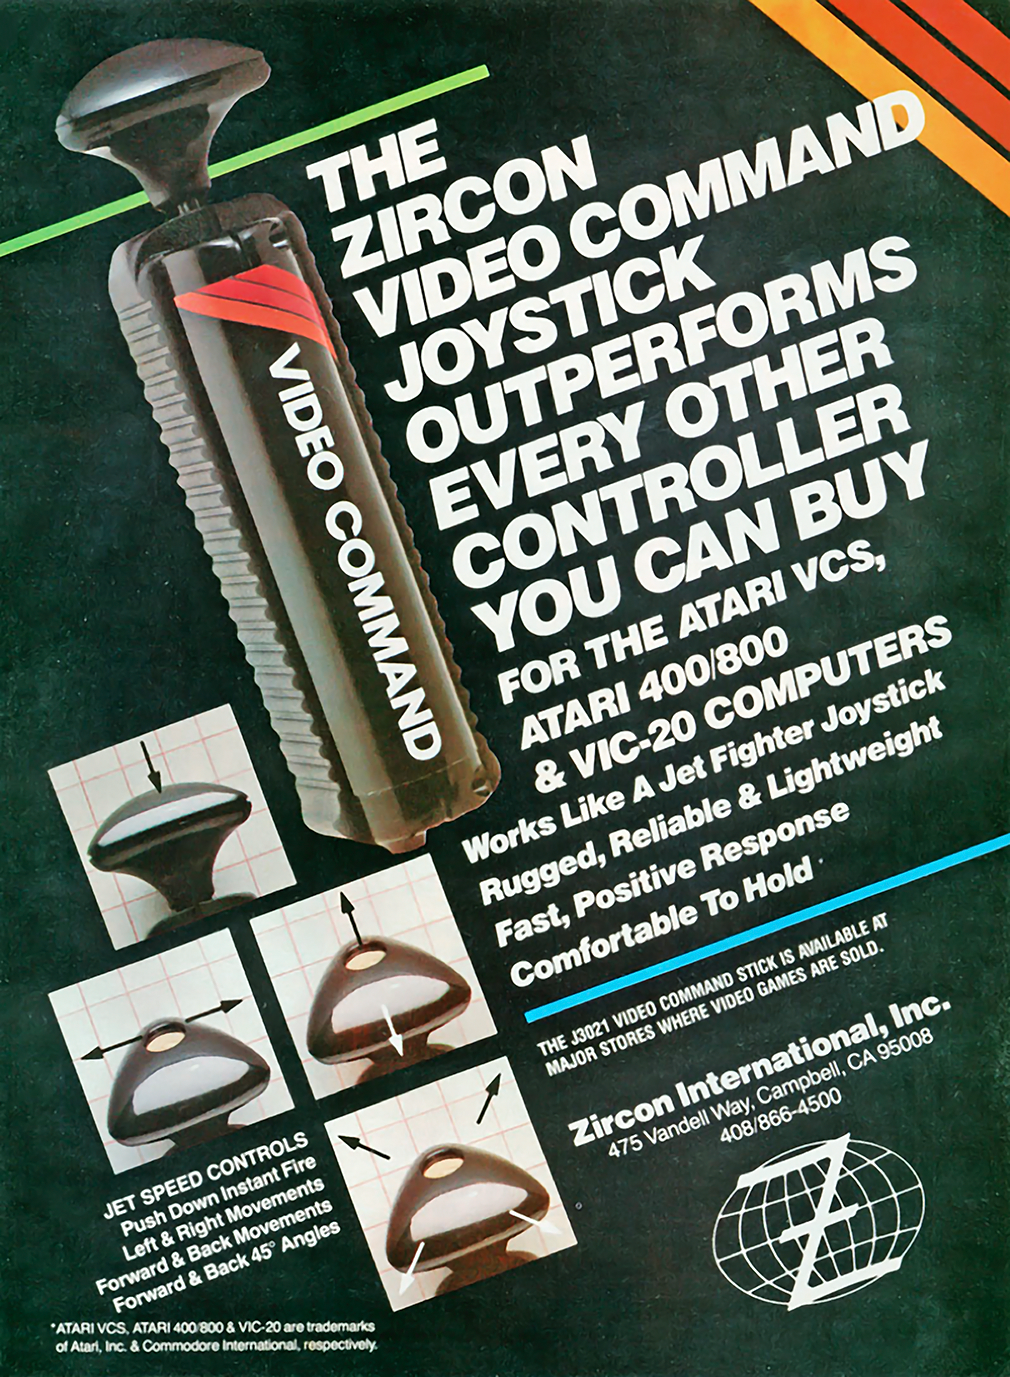 Magazine ad for the Video Command Joystick, by Zircon International